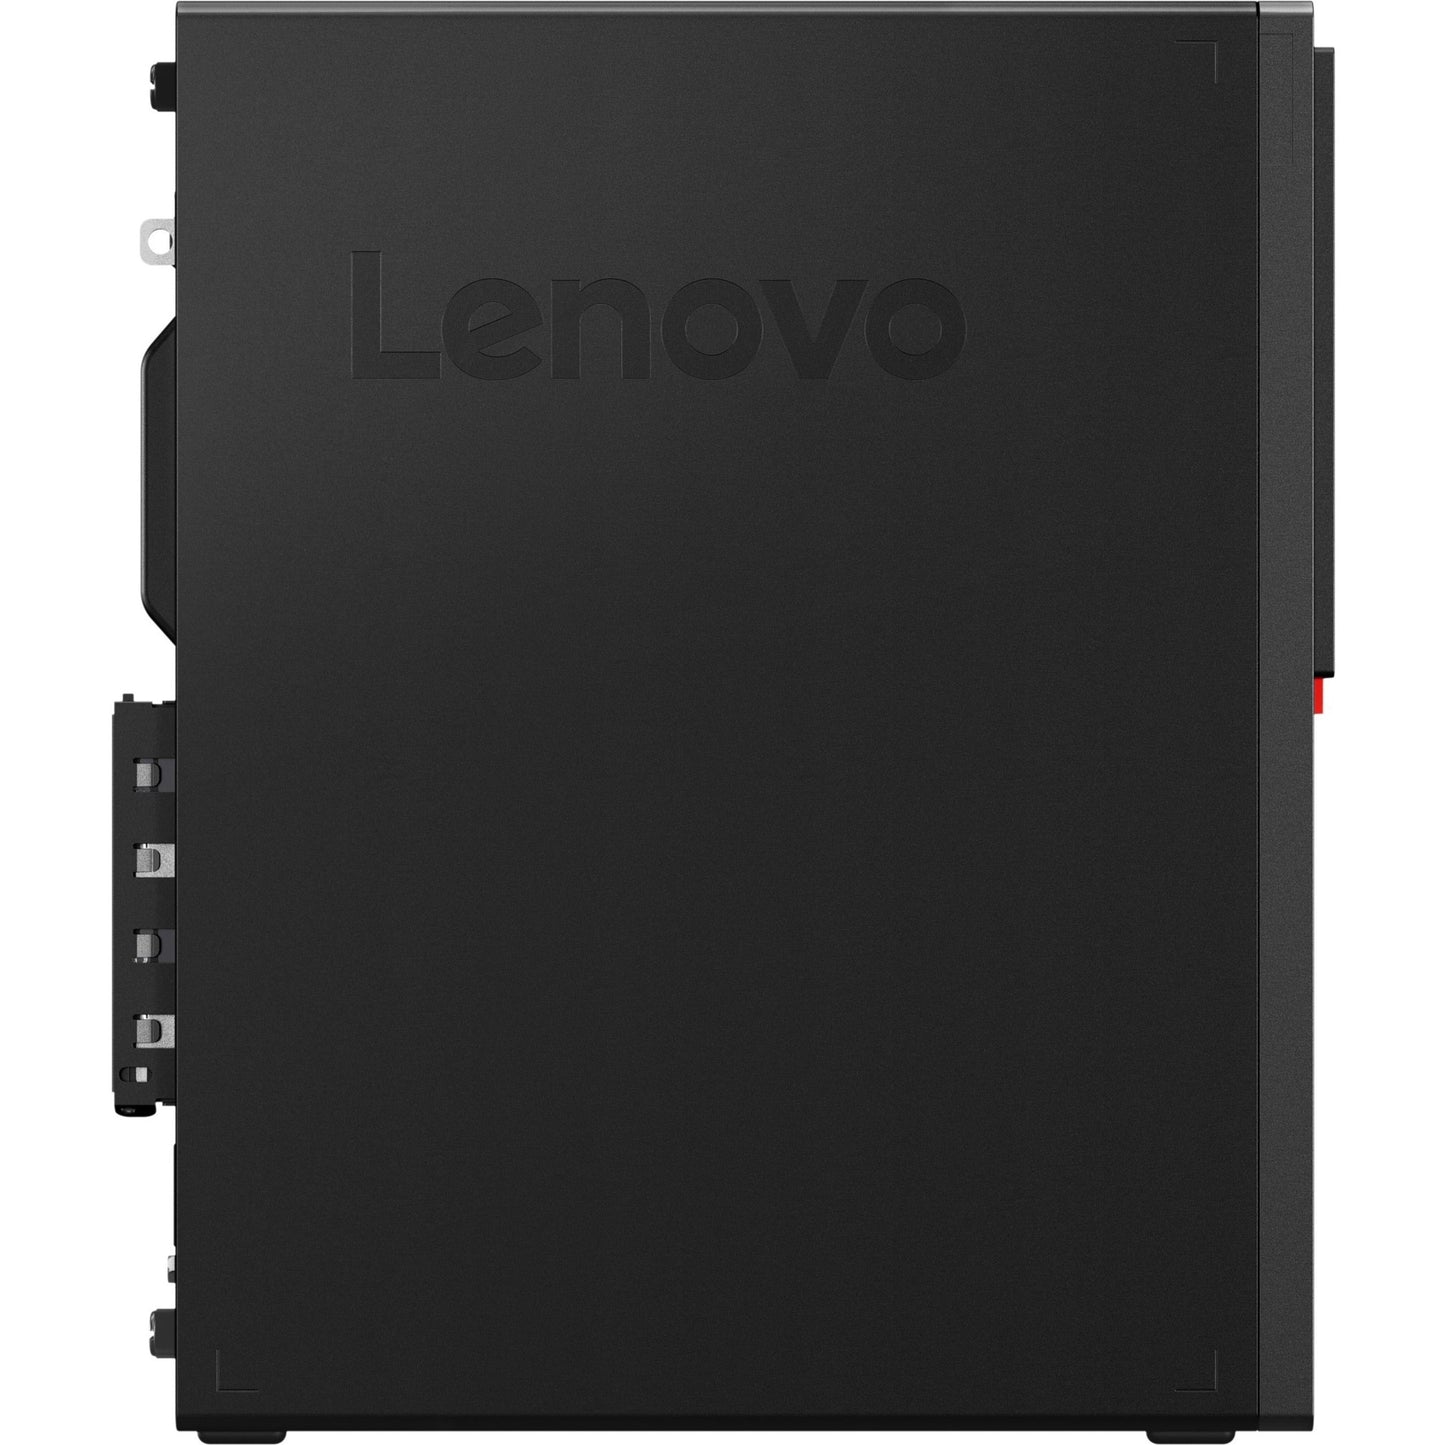 Lenovo ThinkCentre M920s 10SJ0010US Desktop Computer - Intel Core i7 8th Gen i7-8700 3.20 GHz - 8 GB RAM DDR4 SDRAM - 512 GB SSD - Small Form Factor